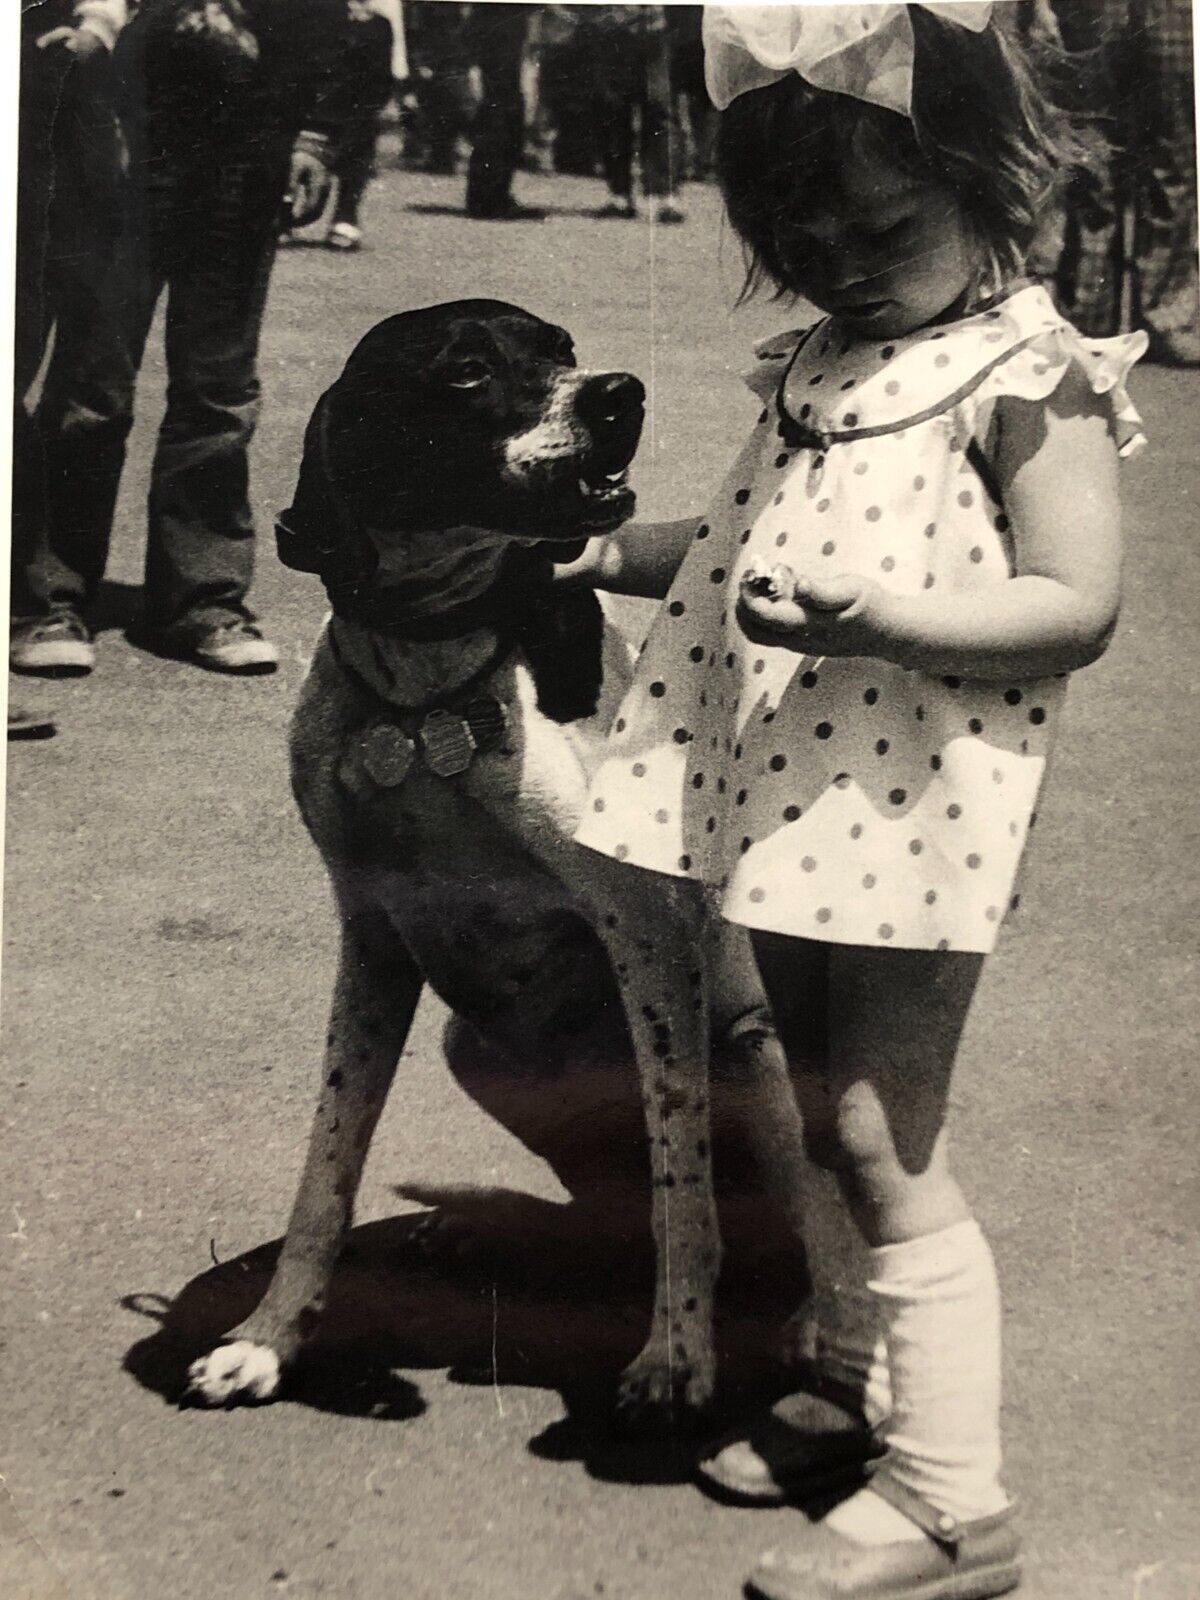 1970s Little Girl Child Petting Dog Exhibition Champion Snapshot Vintage Photo